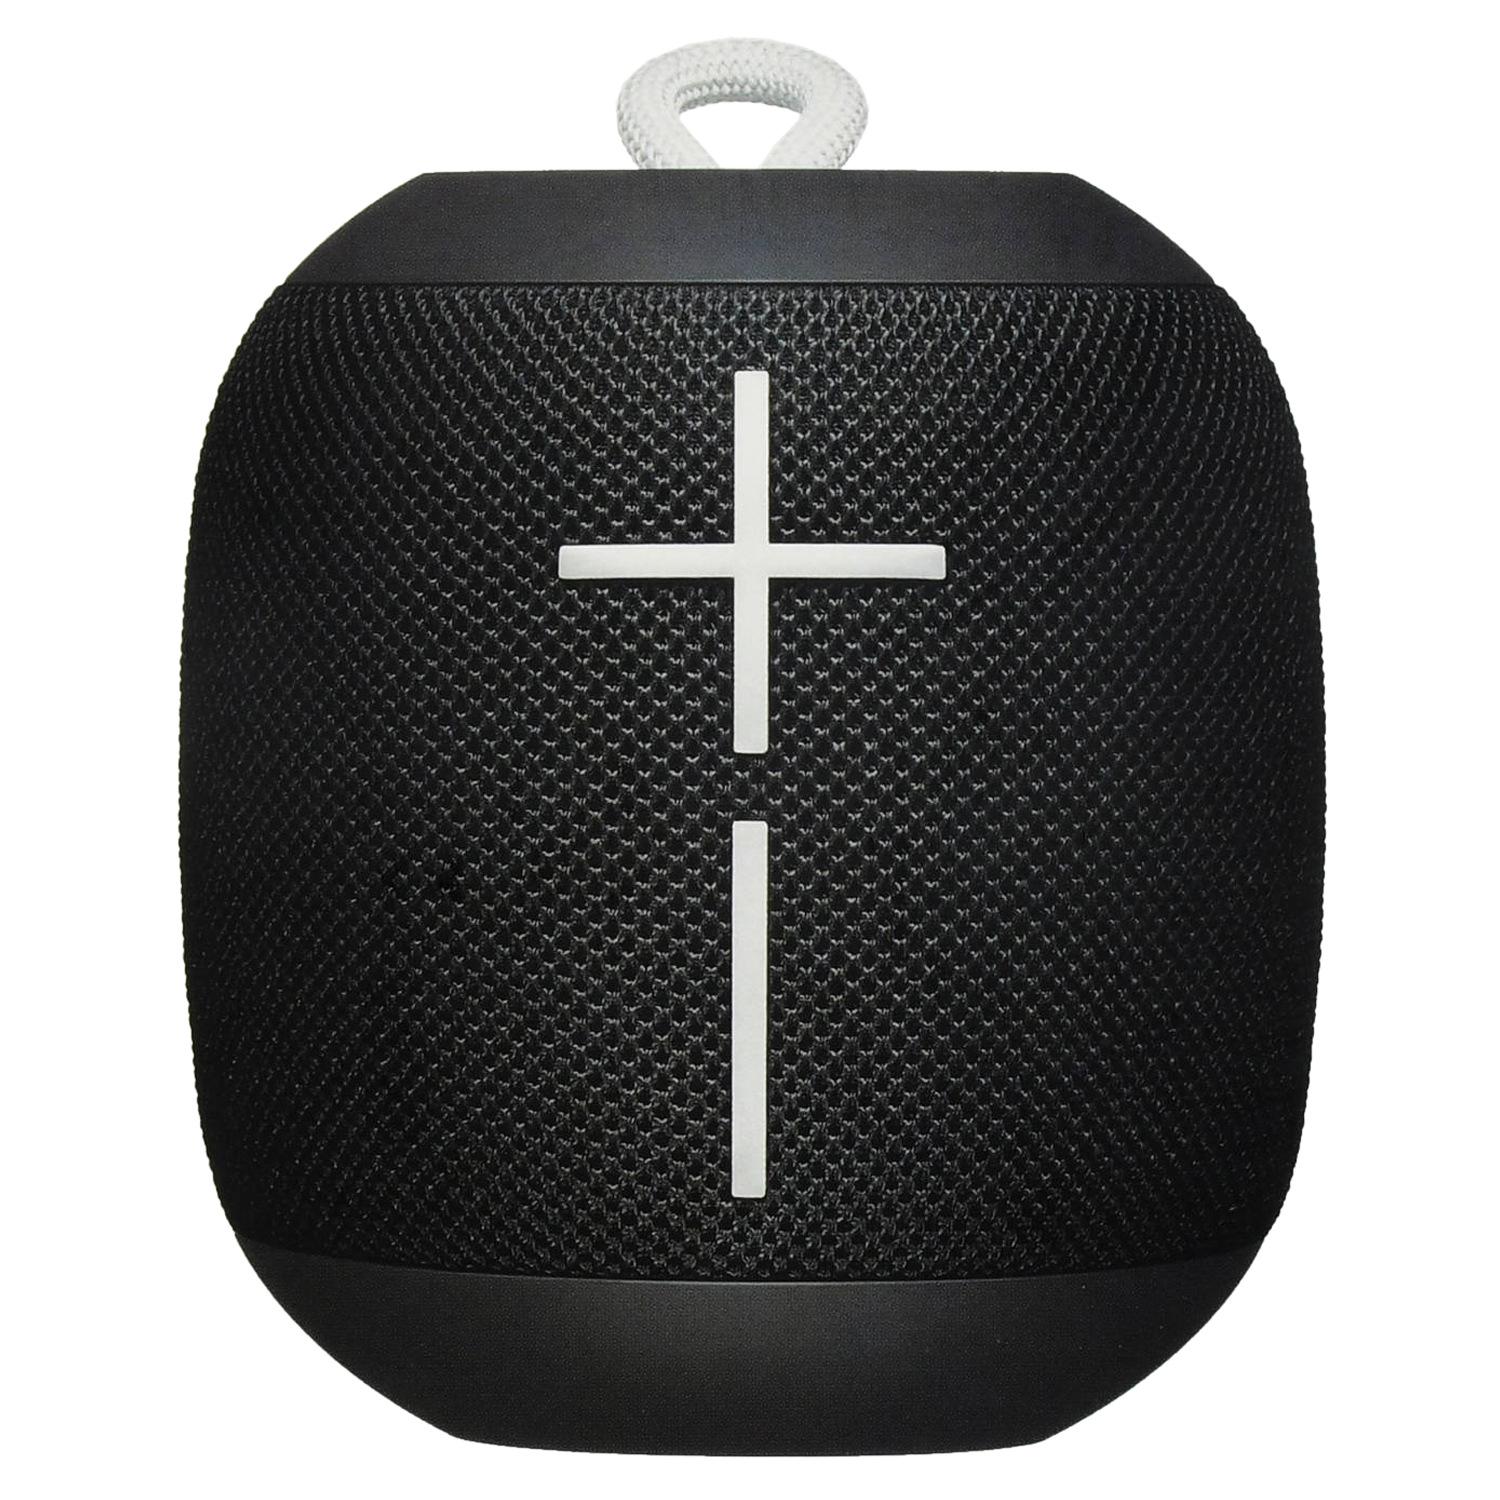 Logitech Ultimate Ears WonderBoom Portable Bluetooth Wireless Speaker - Black - image 1 of 3